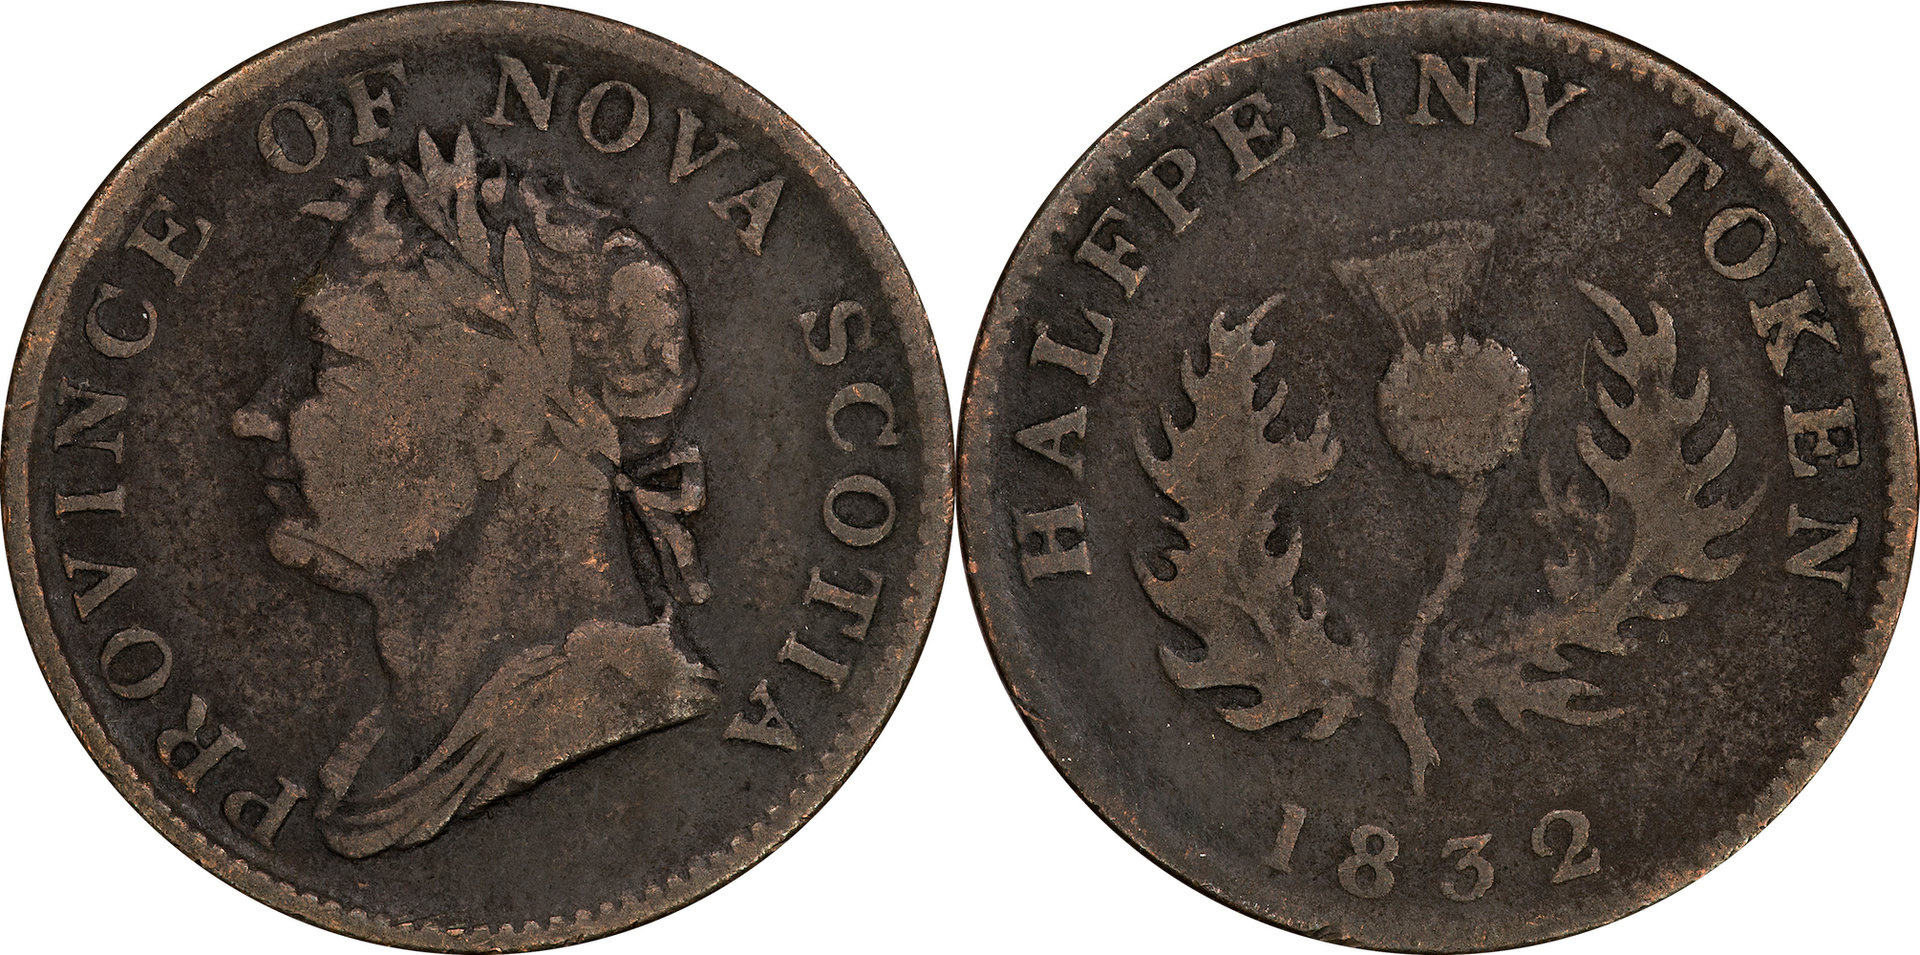 Canada (Nova Scotia) - 1832 Halfpenny Token.jpg